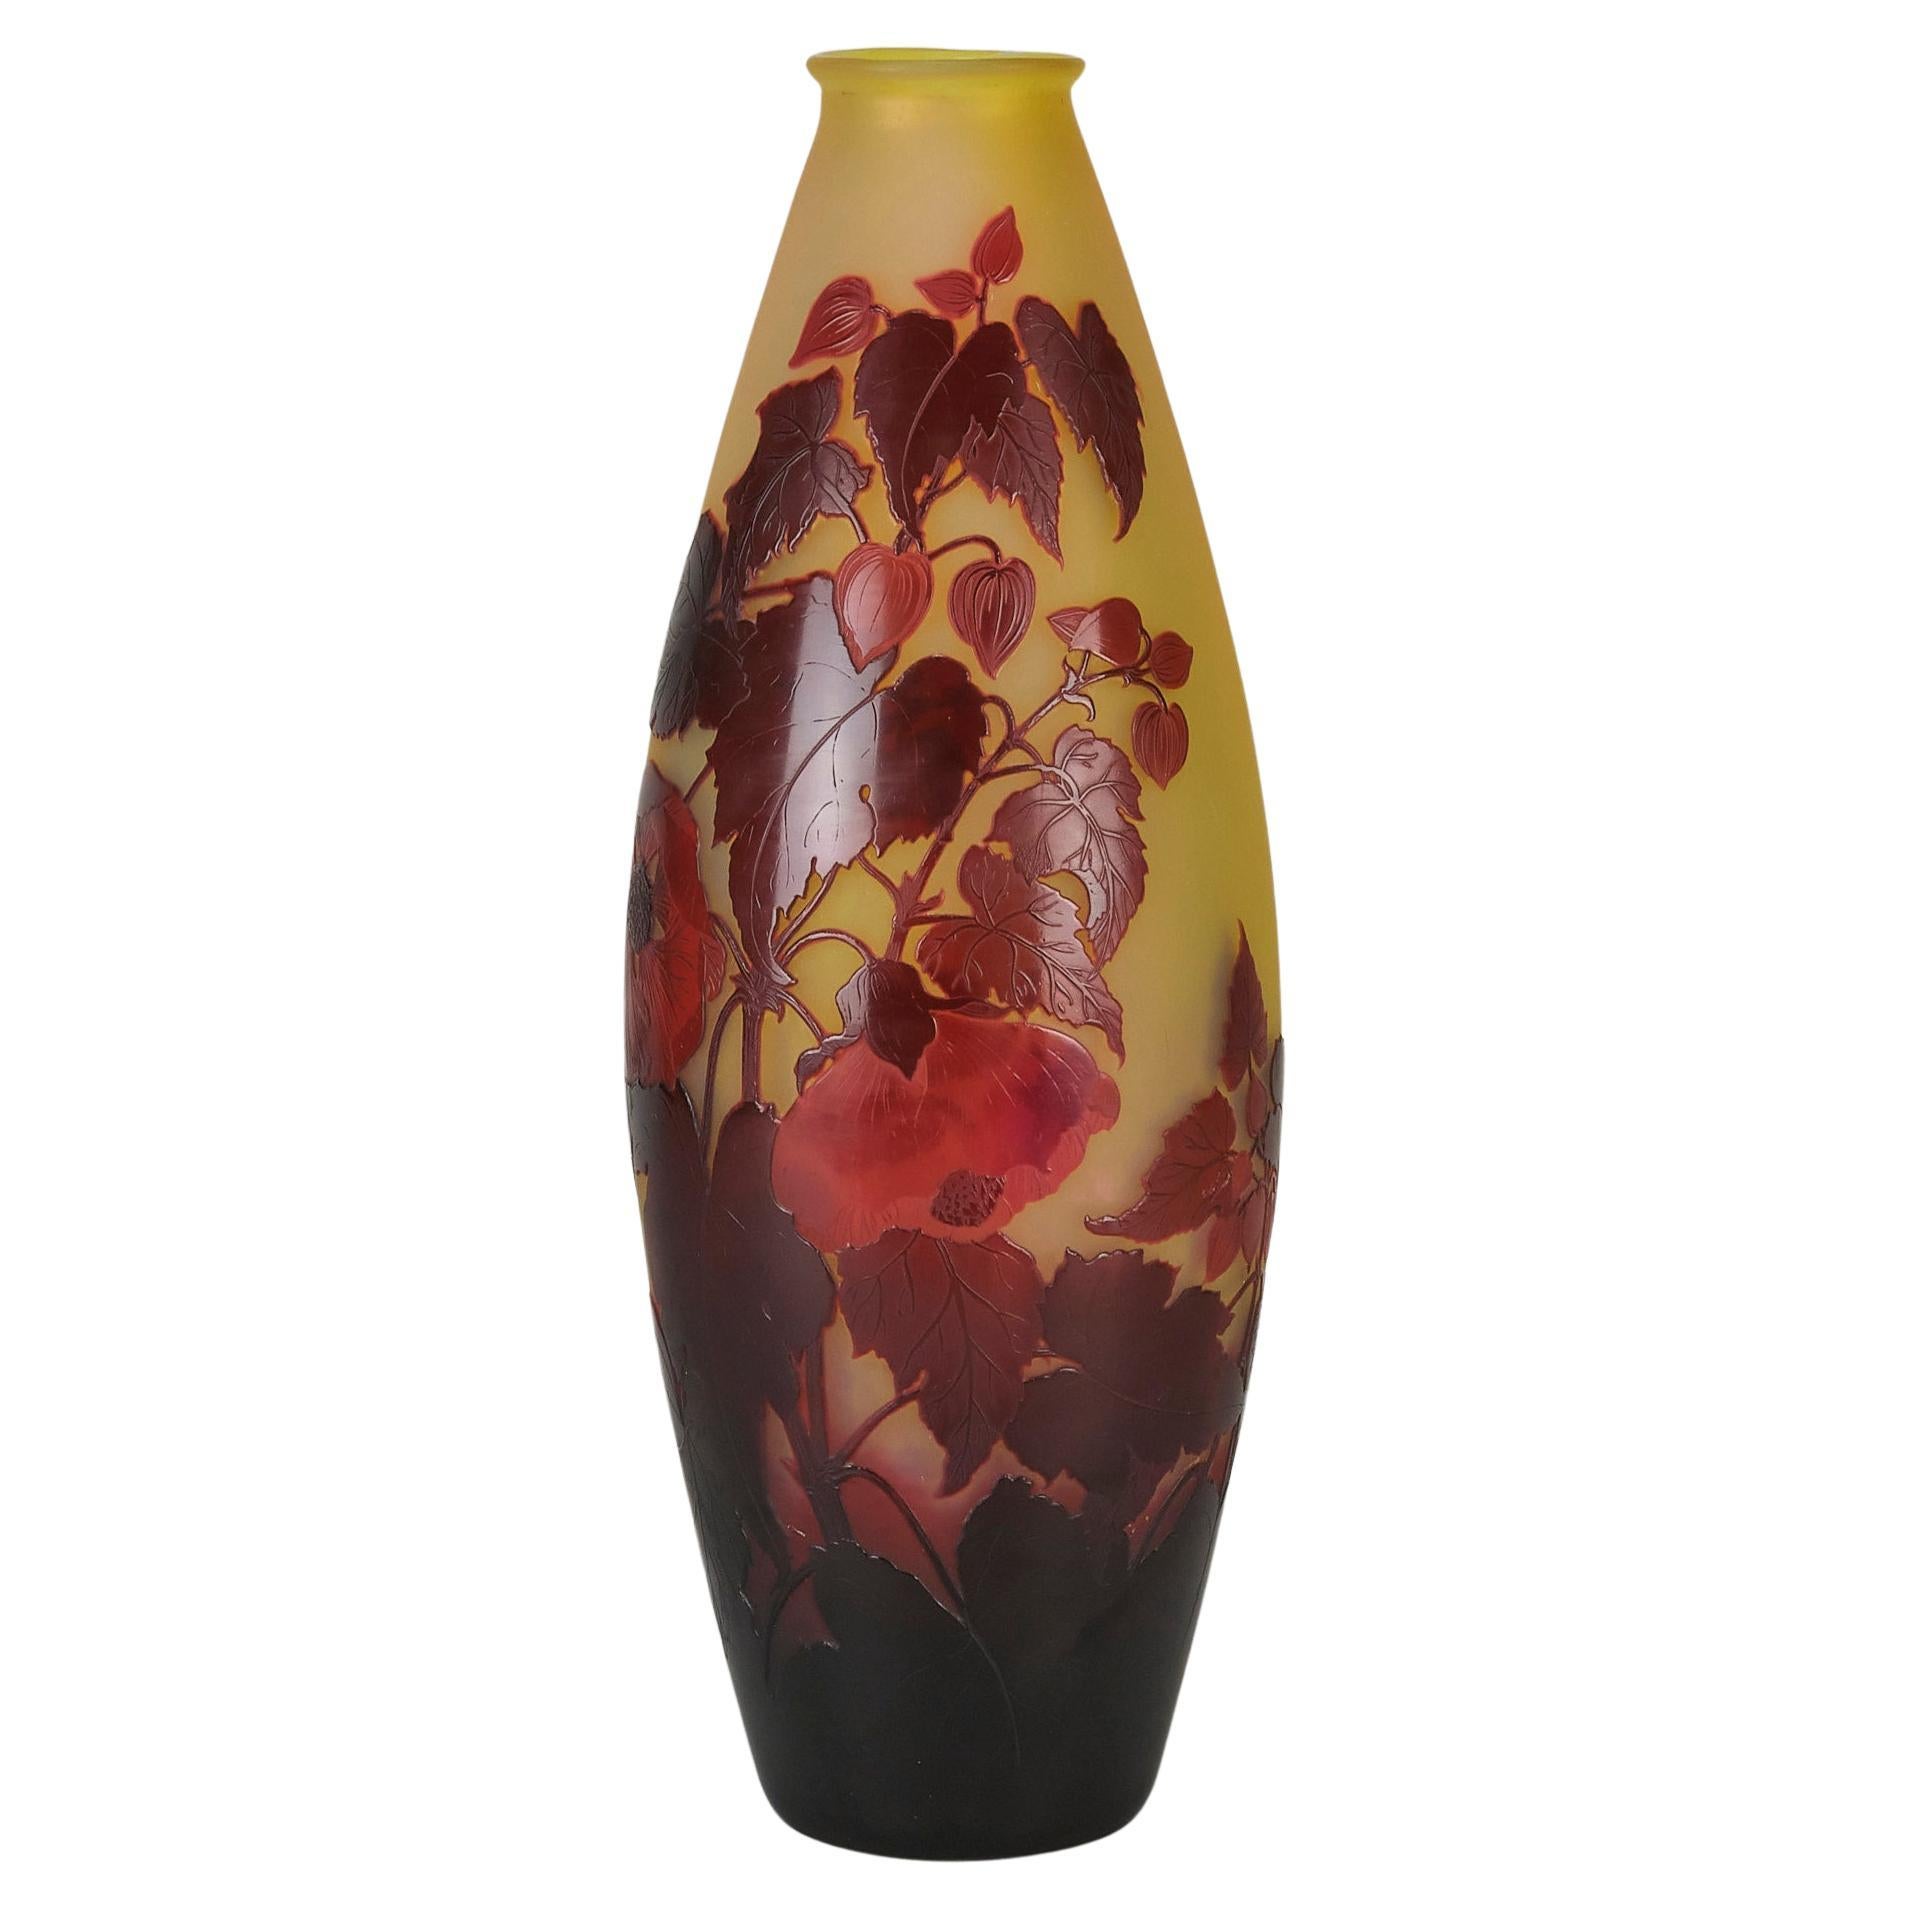 Early 20th Century Art Nouveau Vase entitled "Large Floral Vase" by Emile Galle